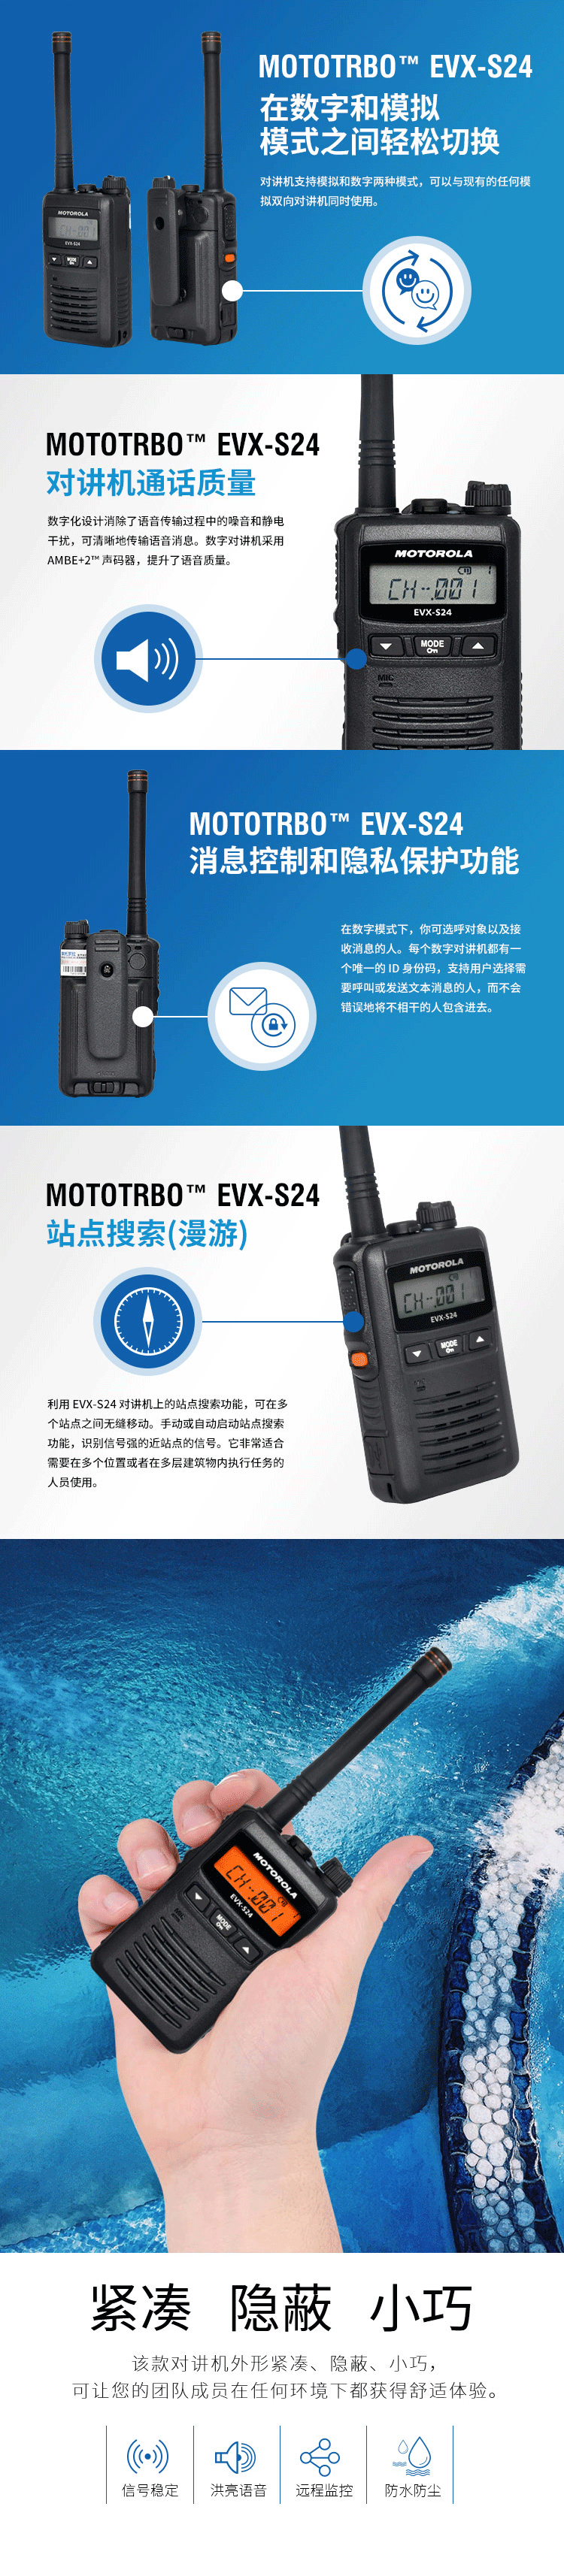 EVX-S24数字便携式对讲机